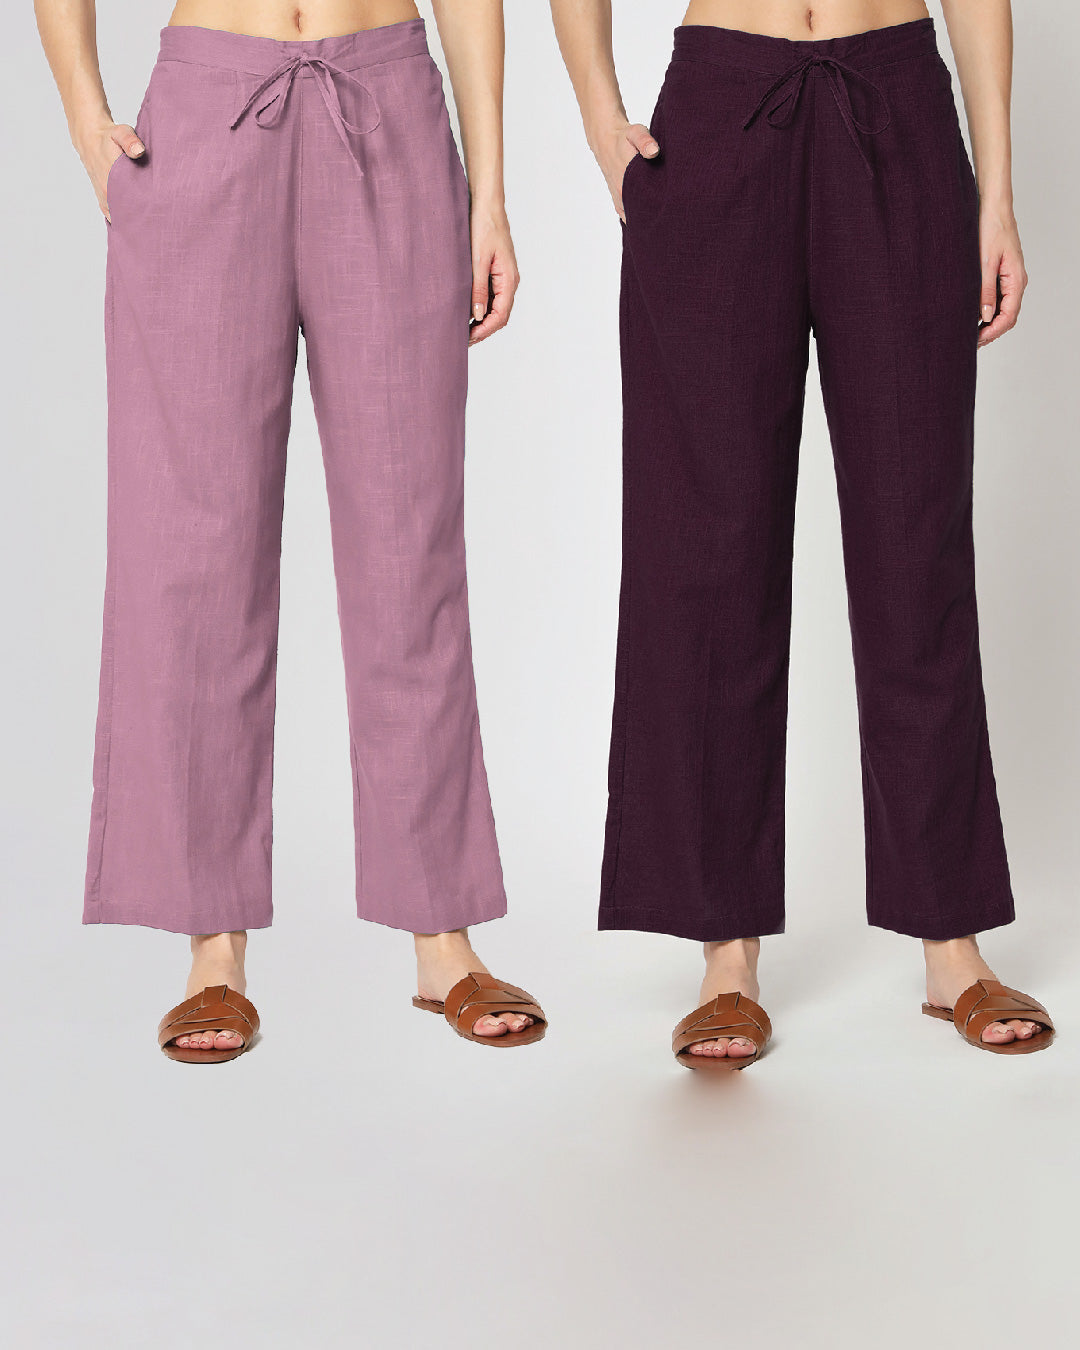 Combo: Iris Pink & Plum Passion Straight Pants- Set of 2